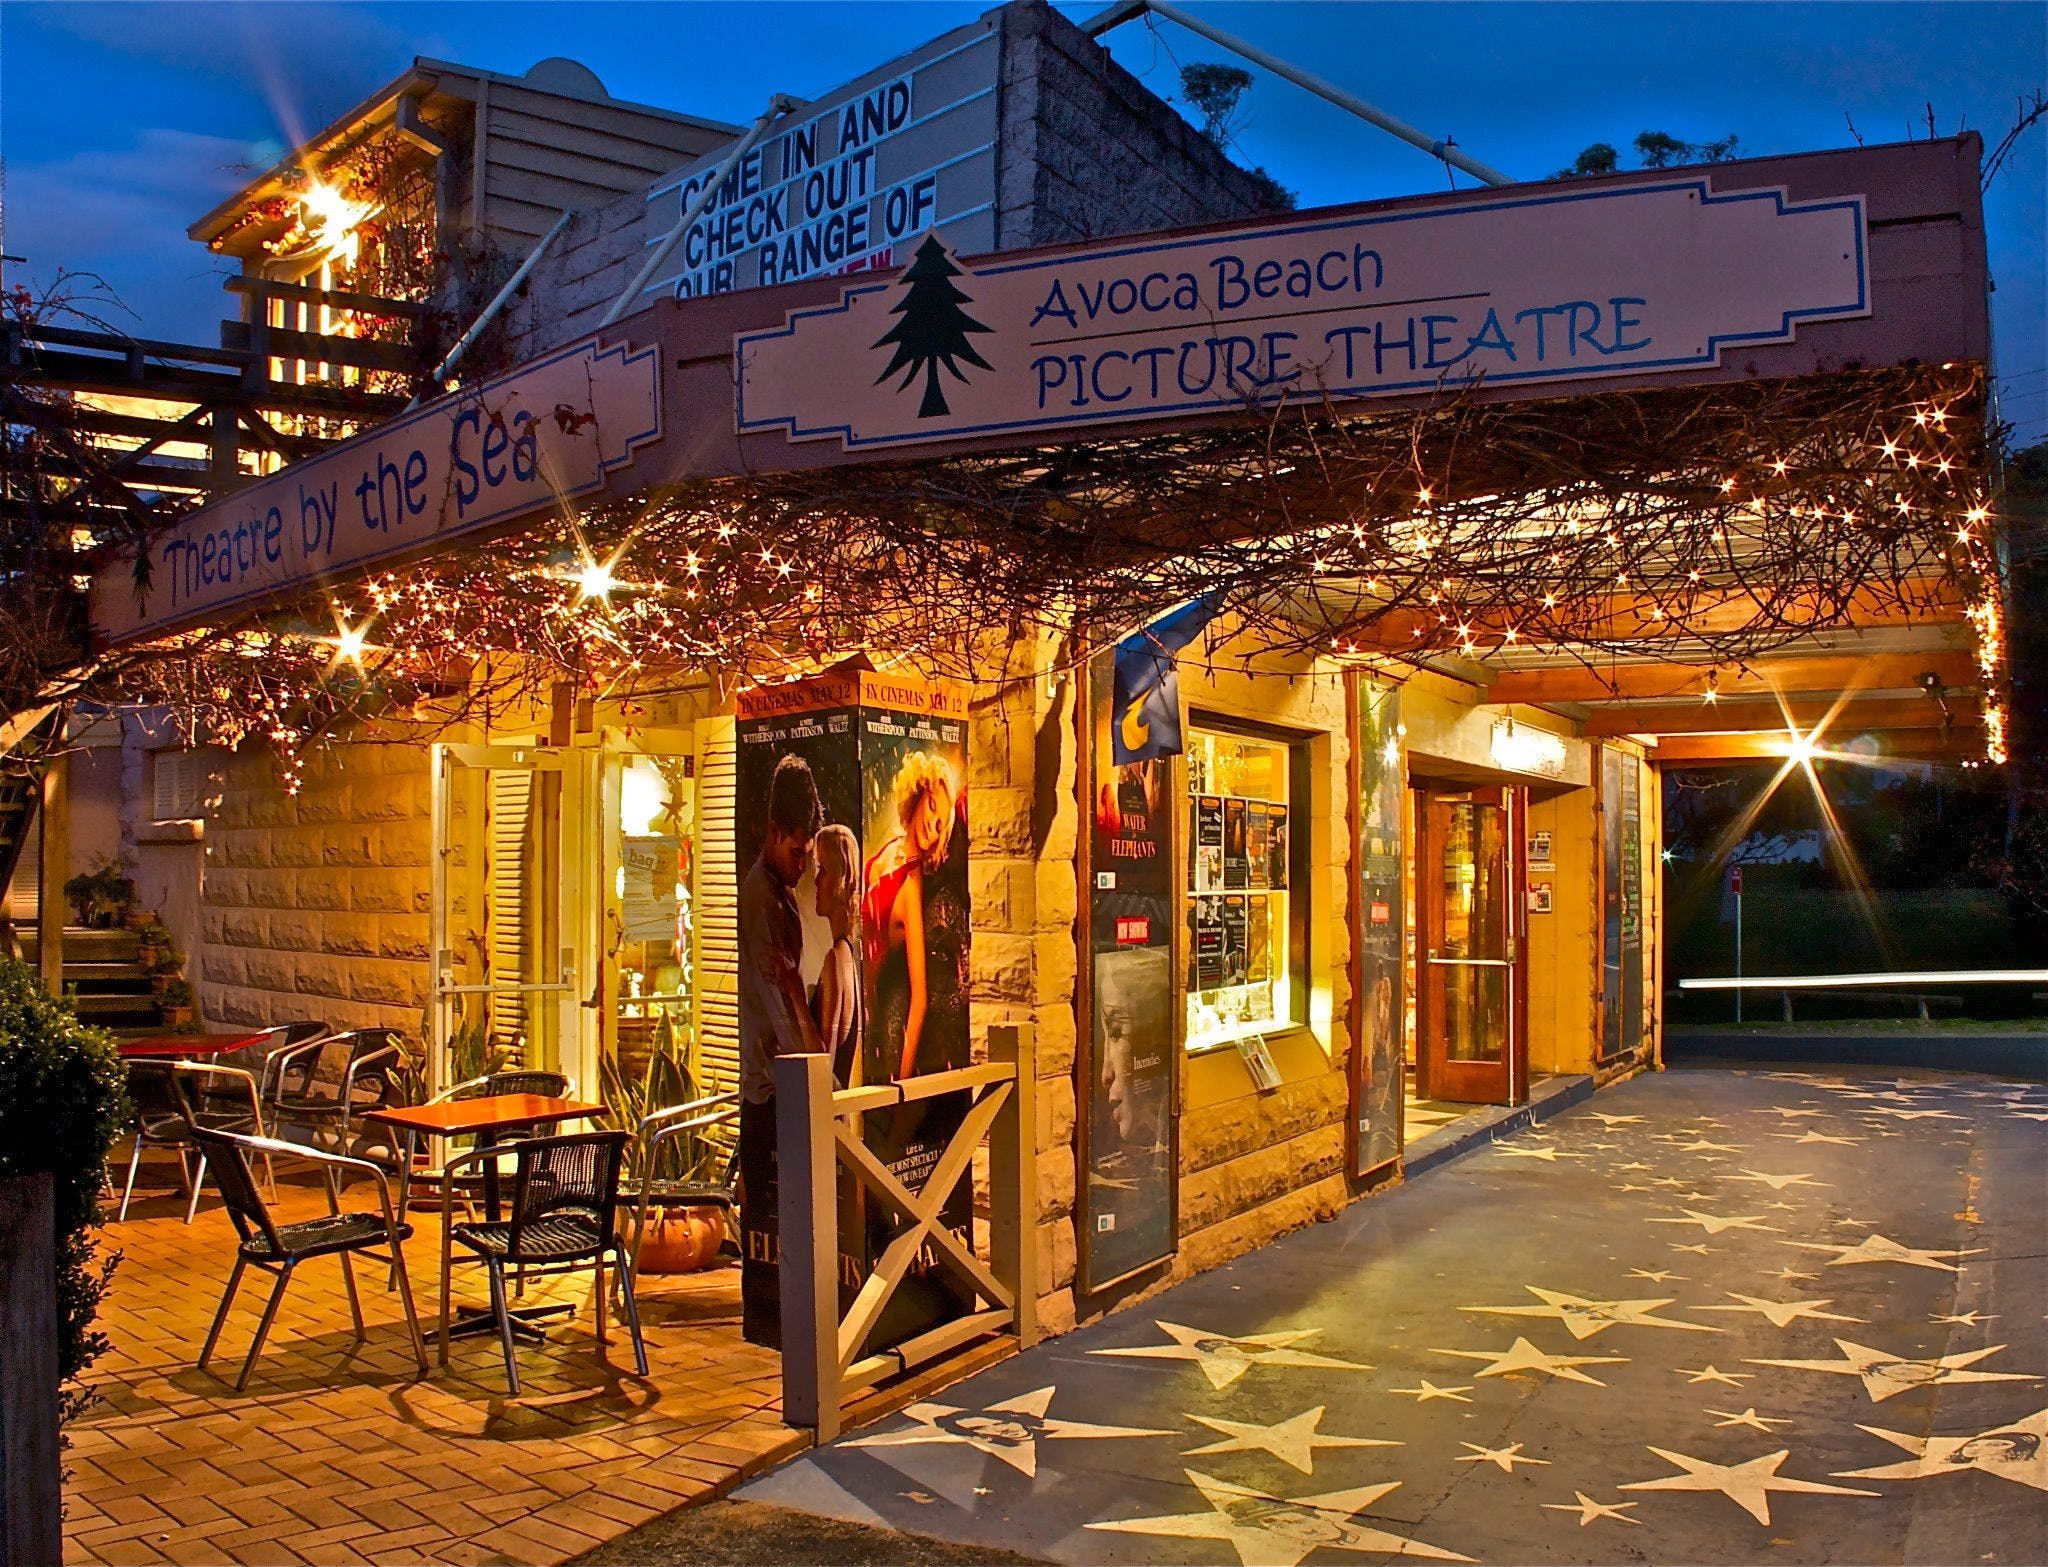 Avoca Beach Picture Theatre - Accommodation Nelson Bay